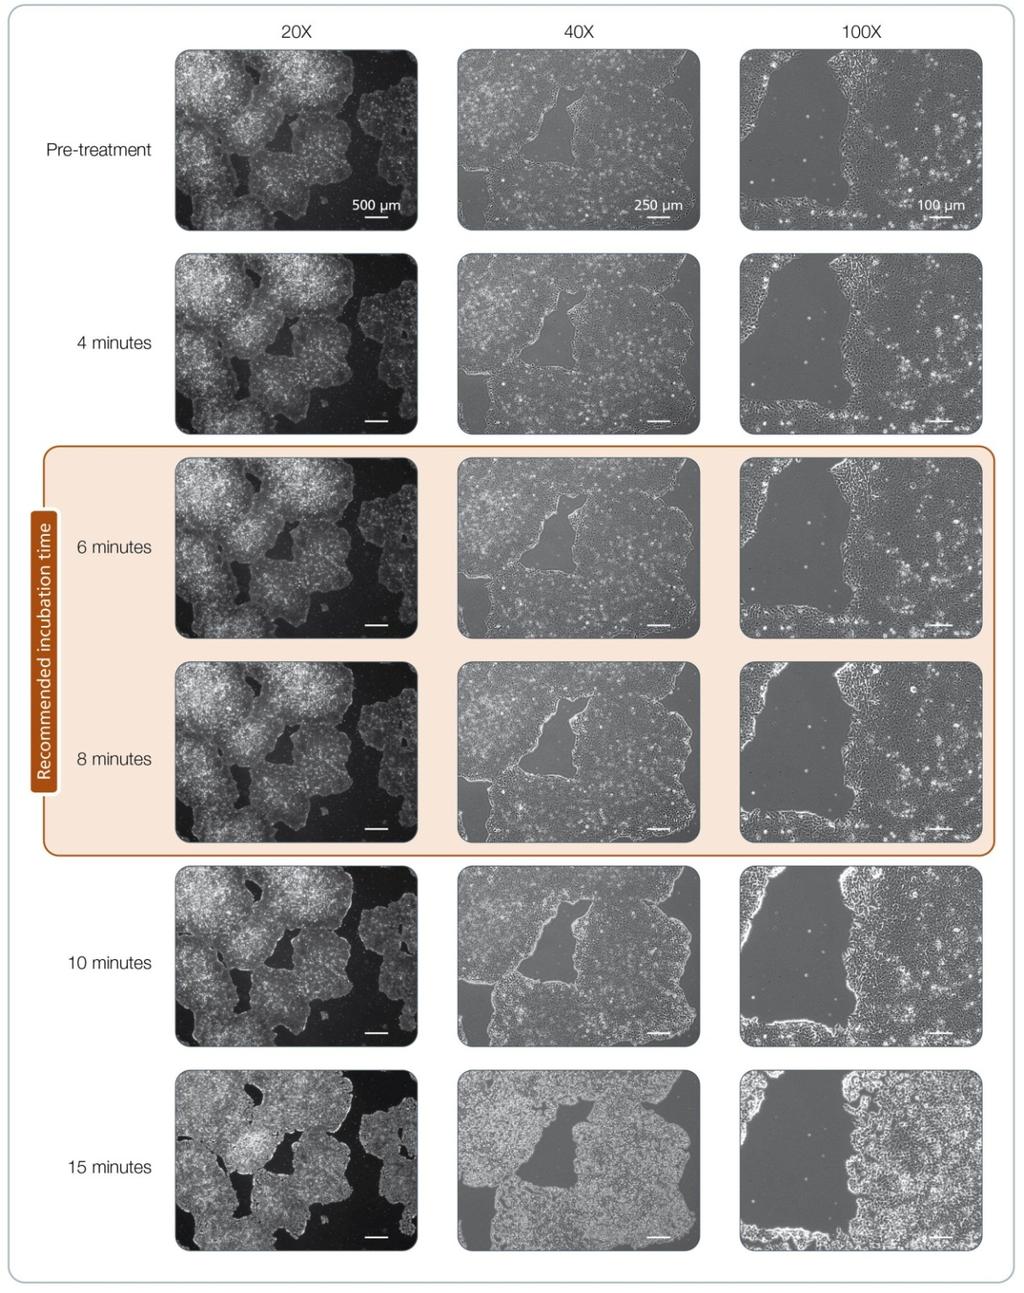 24 Figure 11. Effect of Gentle Cell Dissociation Reagent on Human ips Cells Cultured on Corning Matrigel Matrix in TeSR -E8 Medium.